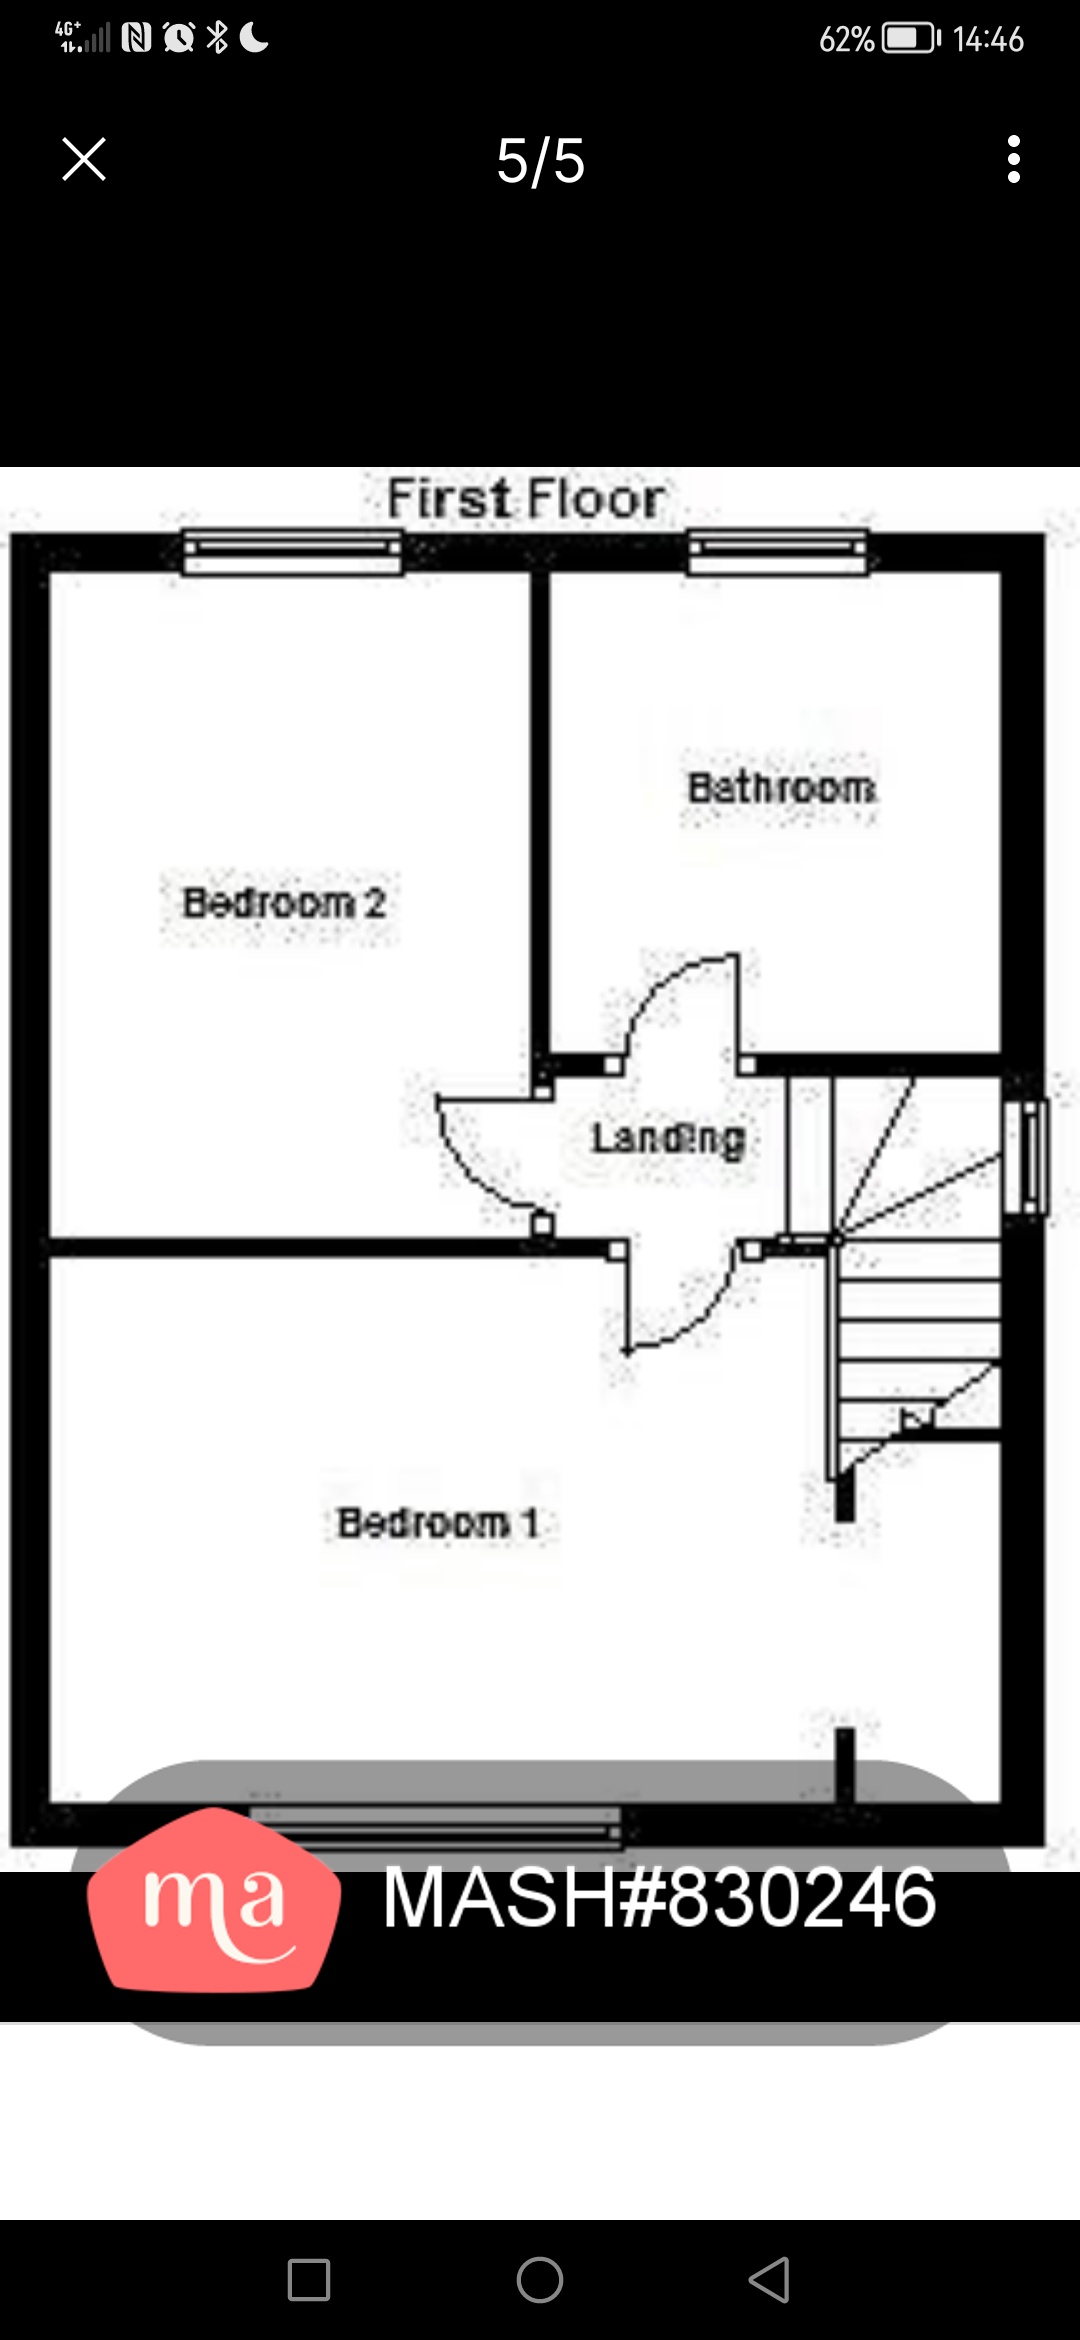 2 Bedroom Semi-detached to rent in Oxford - Mashroom